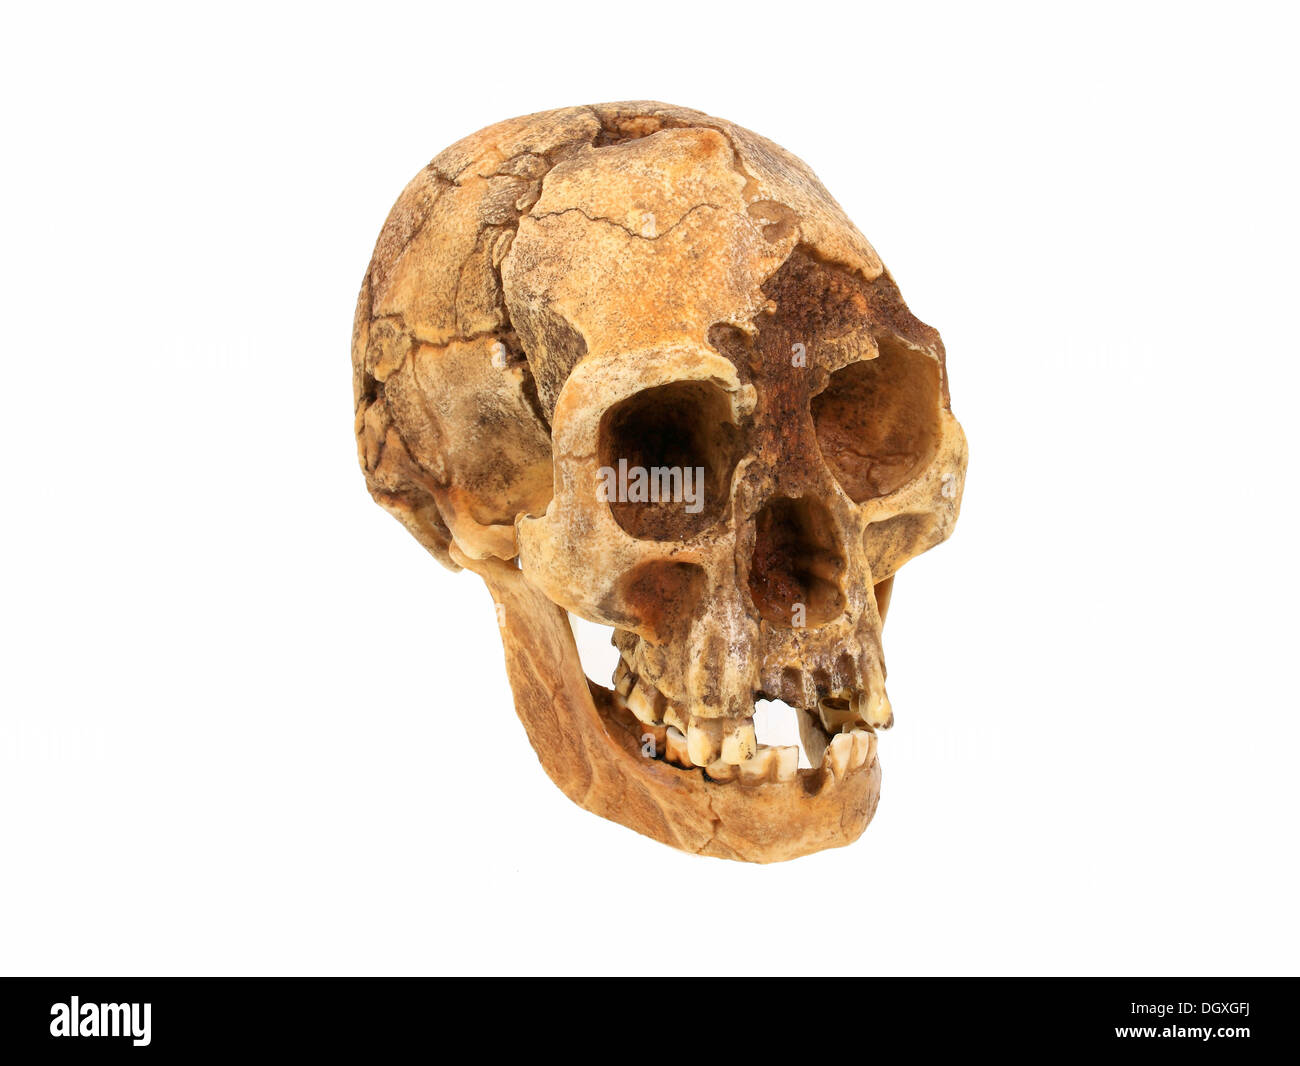 Replica skull of Homo floresiensis, The Hobbit, evolution of human species Stock Photo